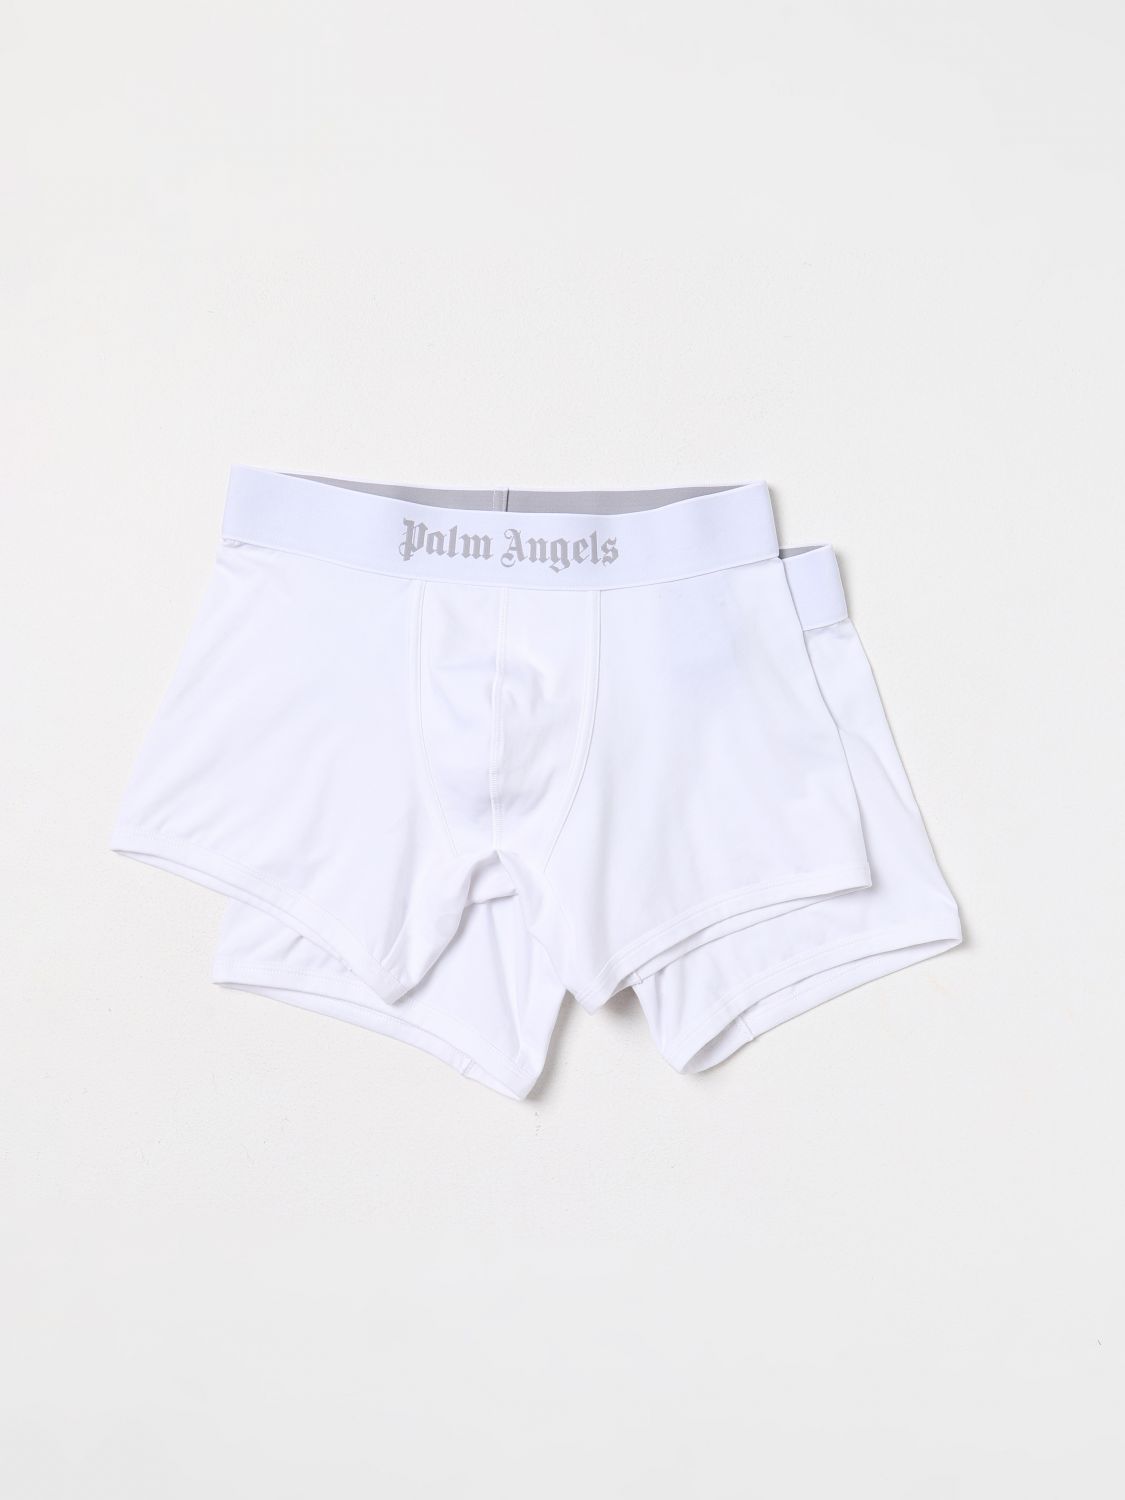 Palm Angels Underwear  Men Color White